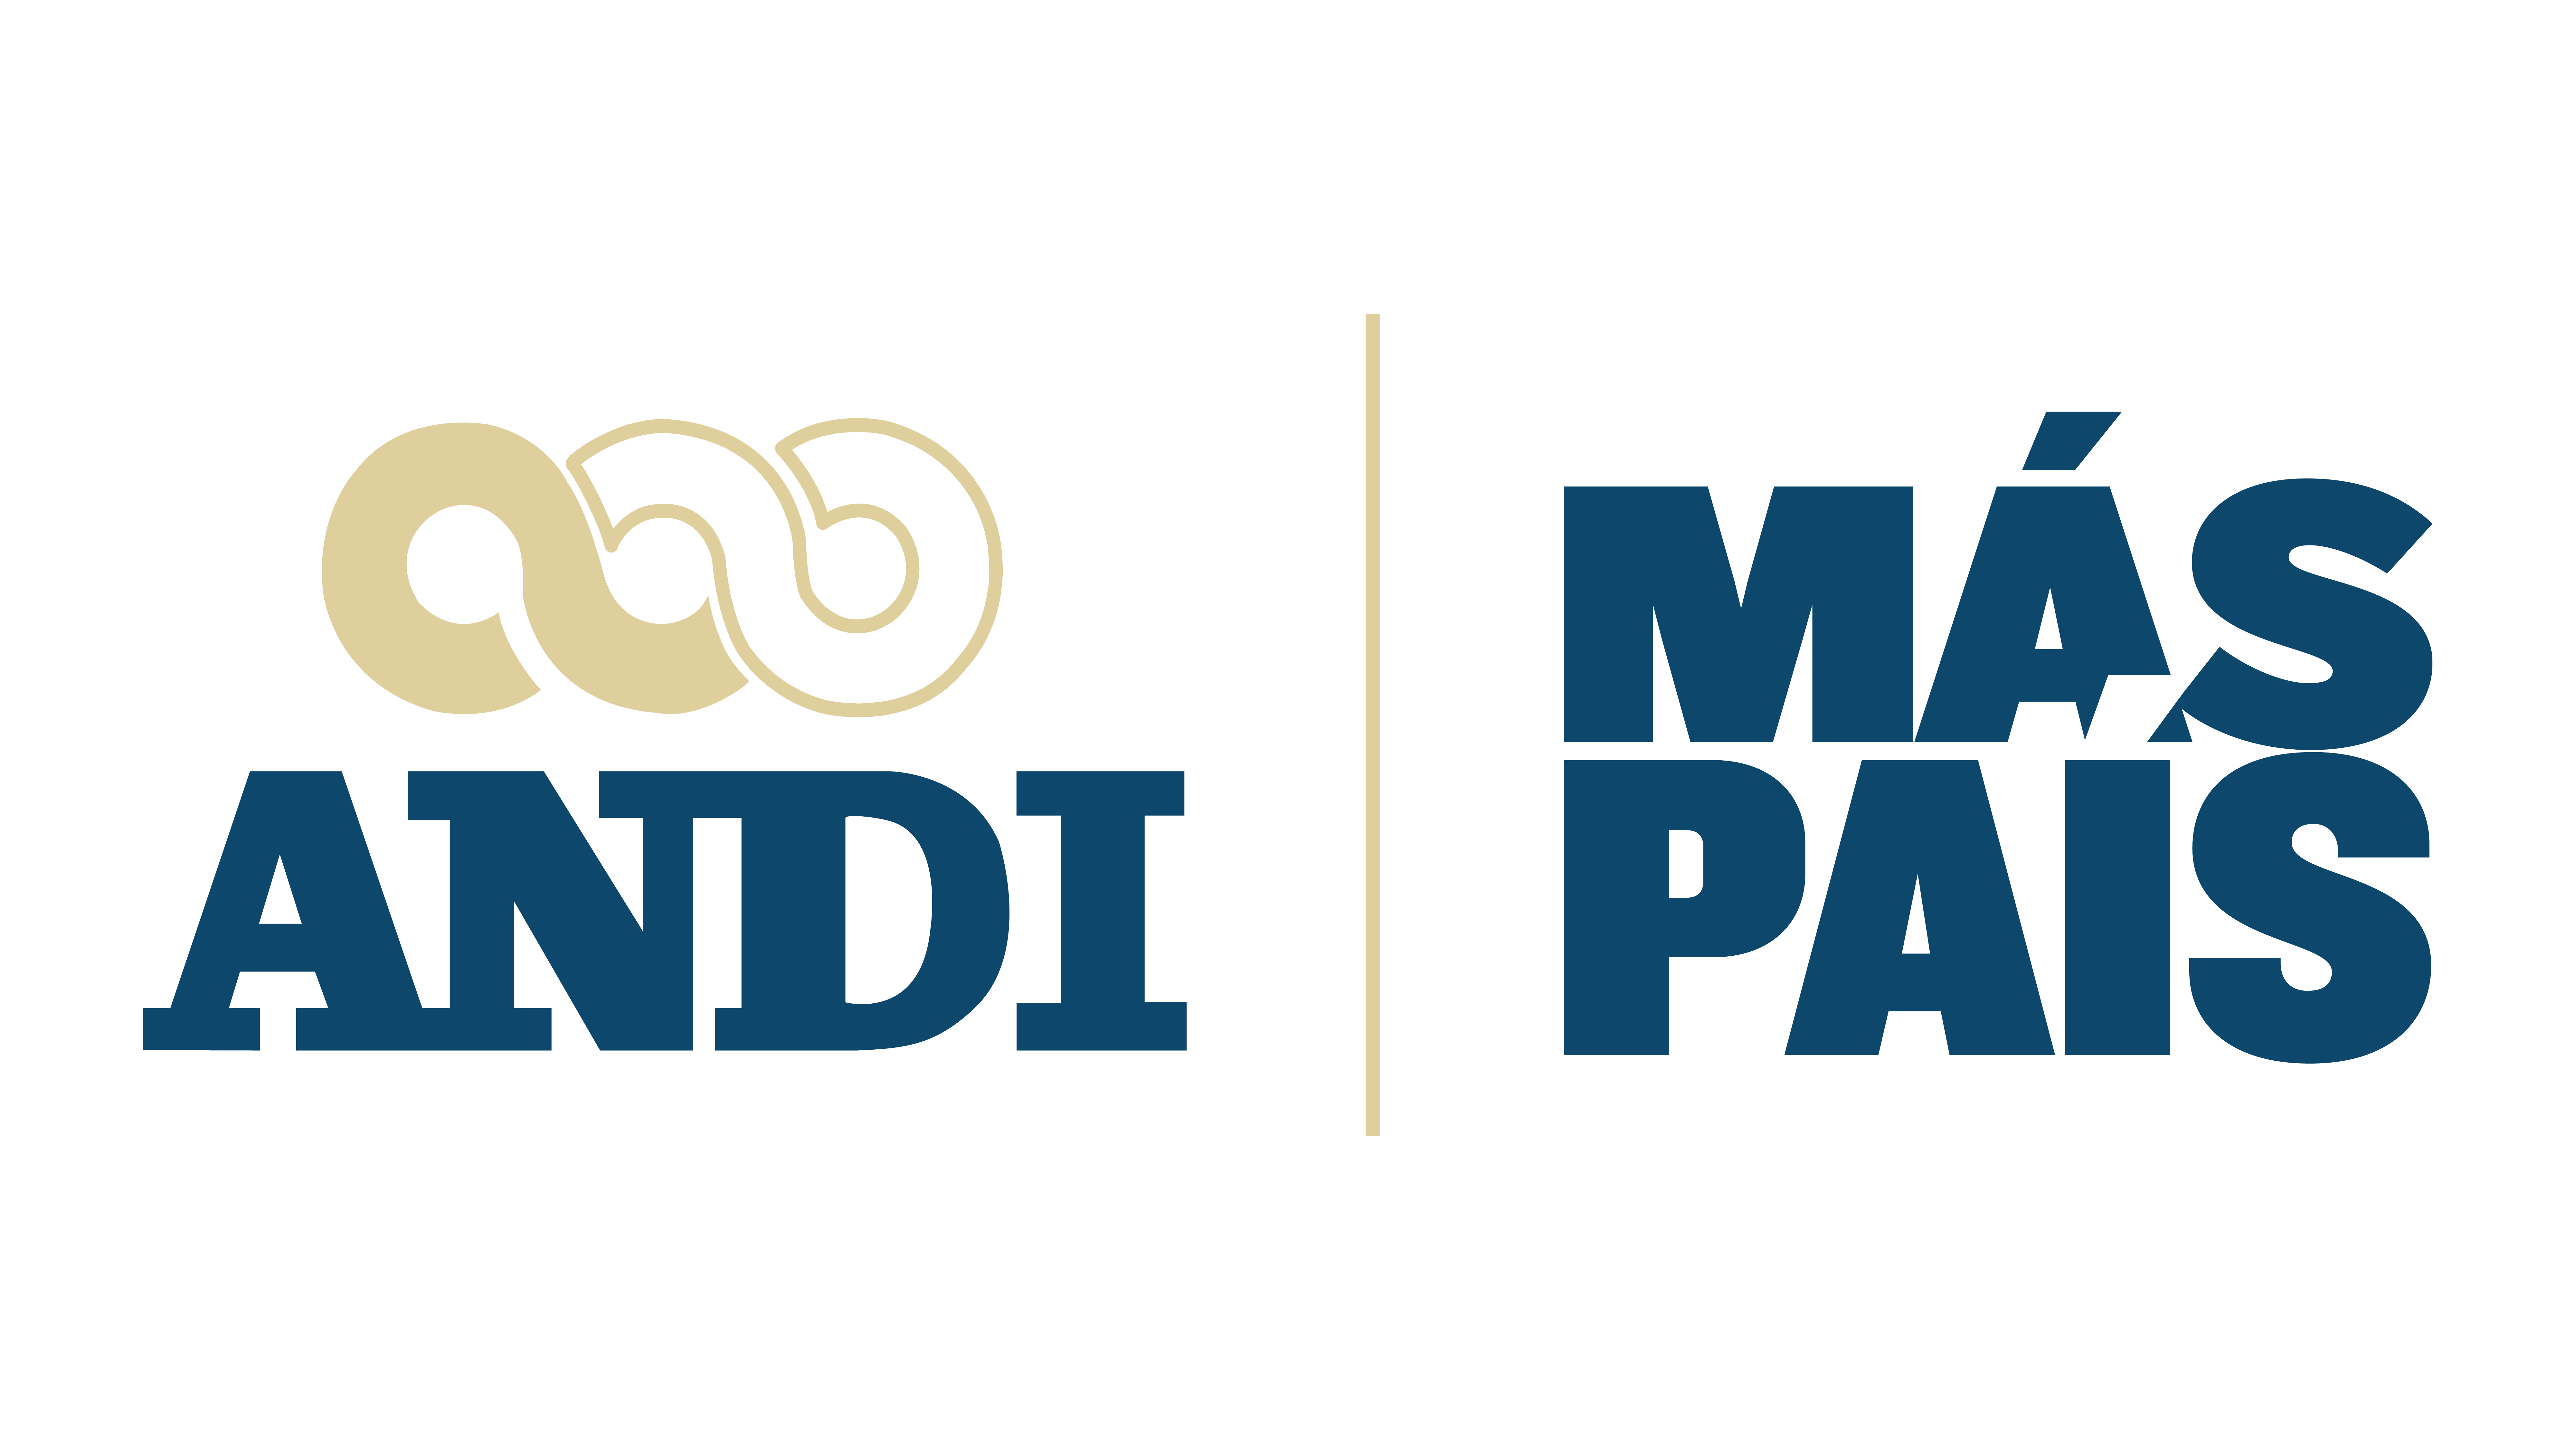 ANDI Logo